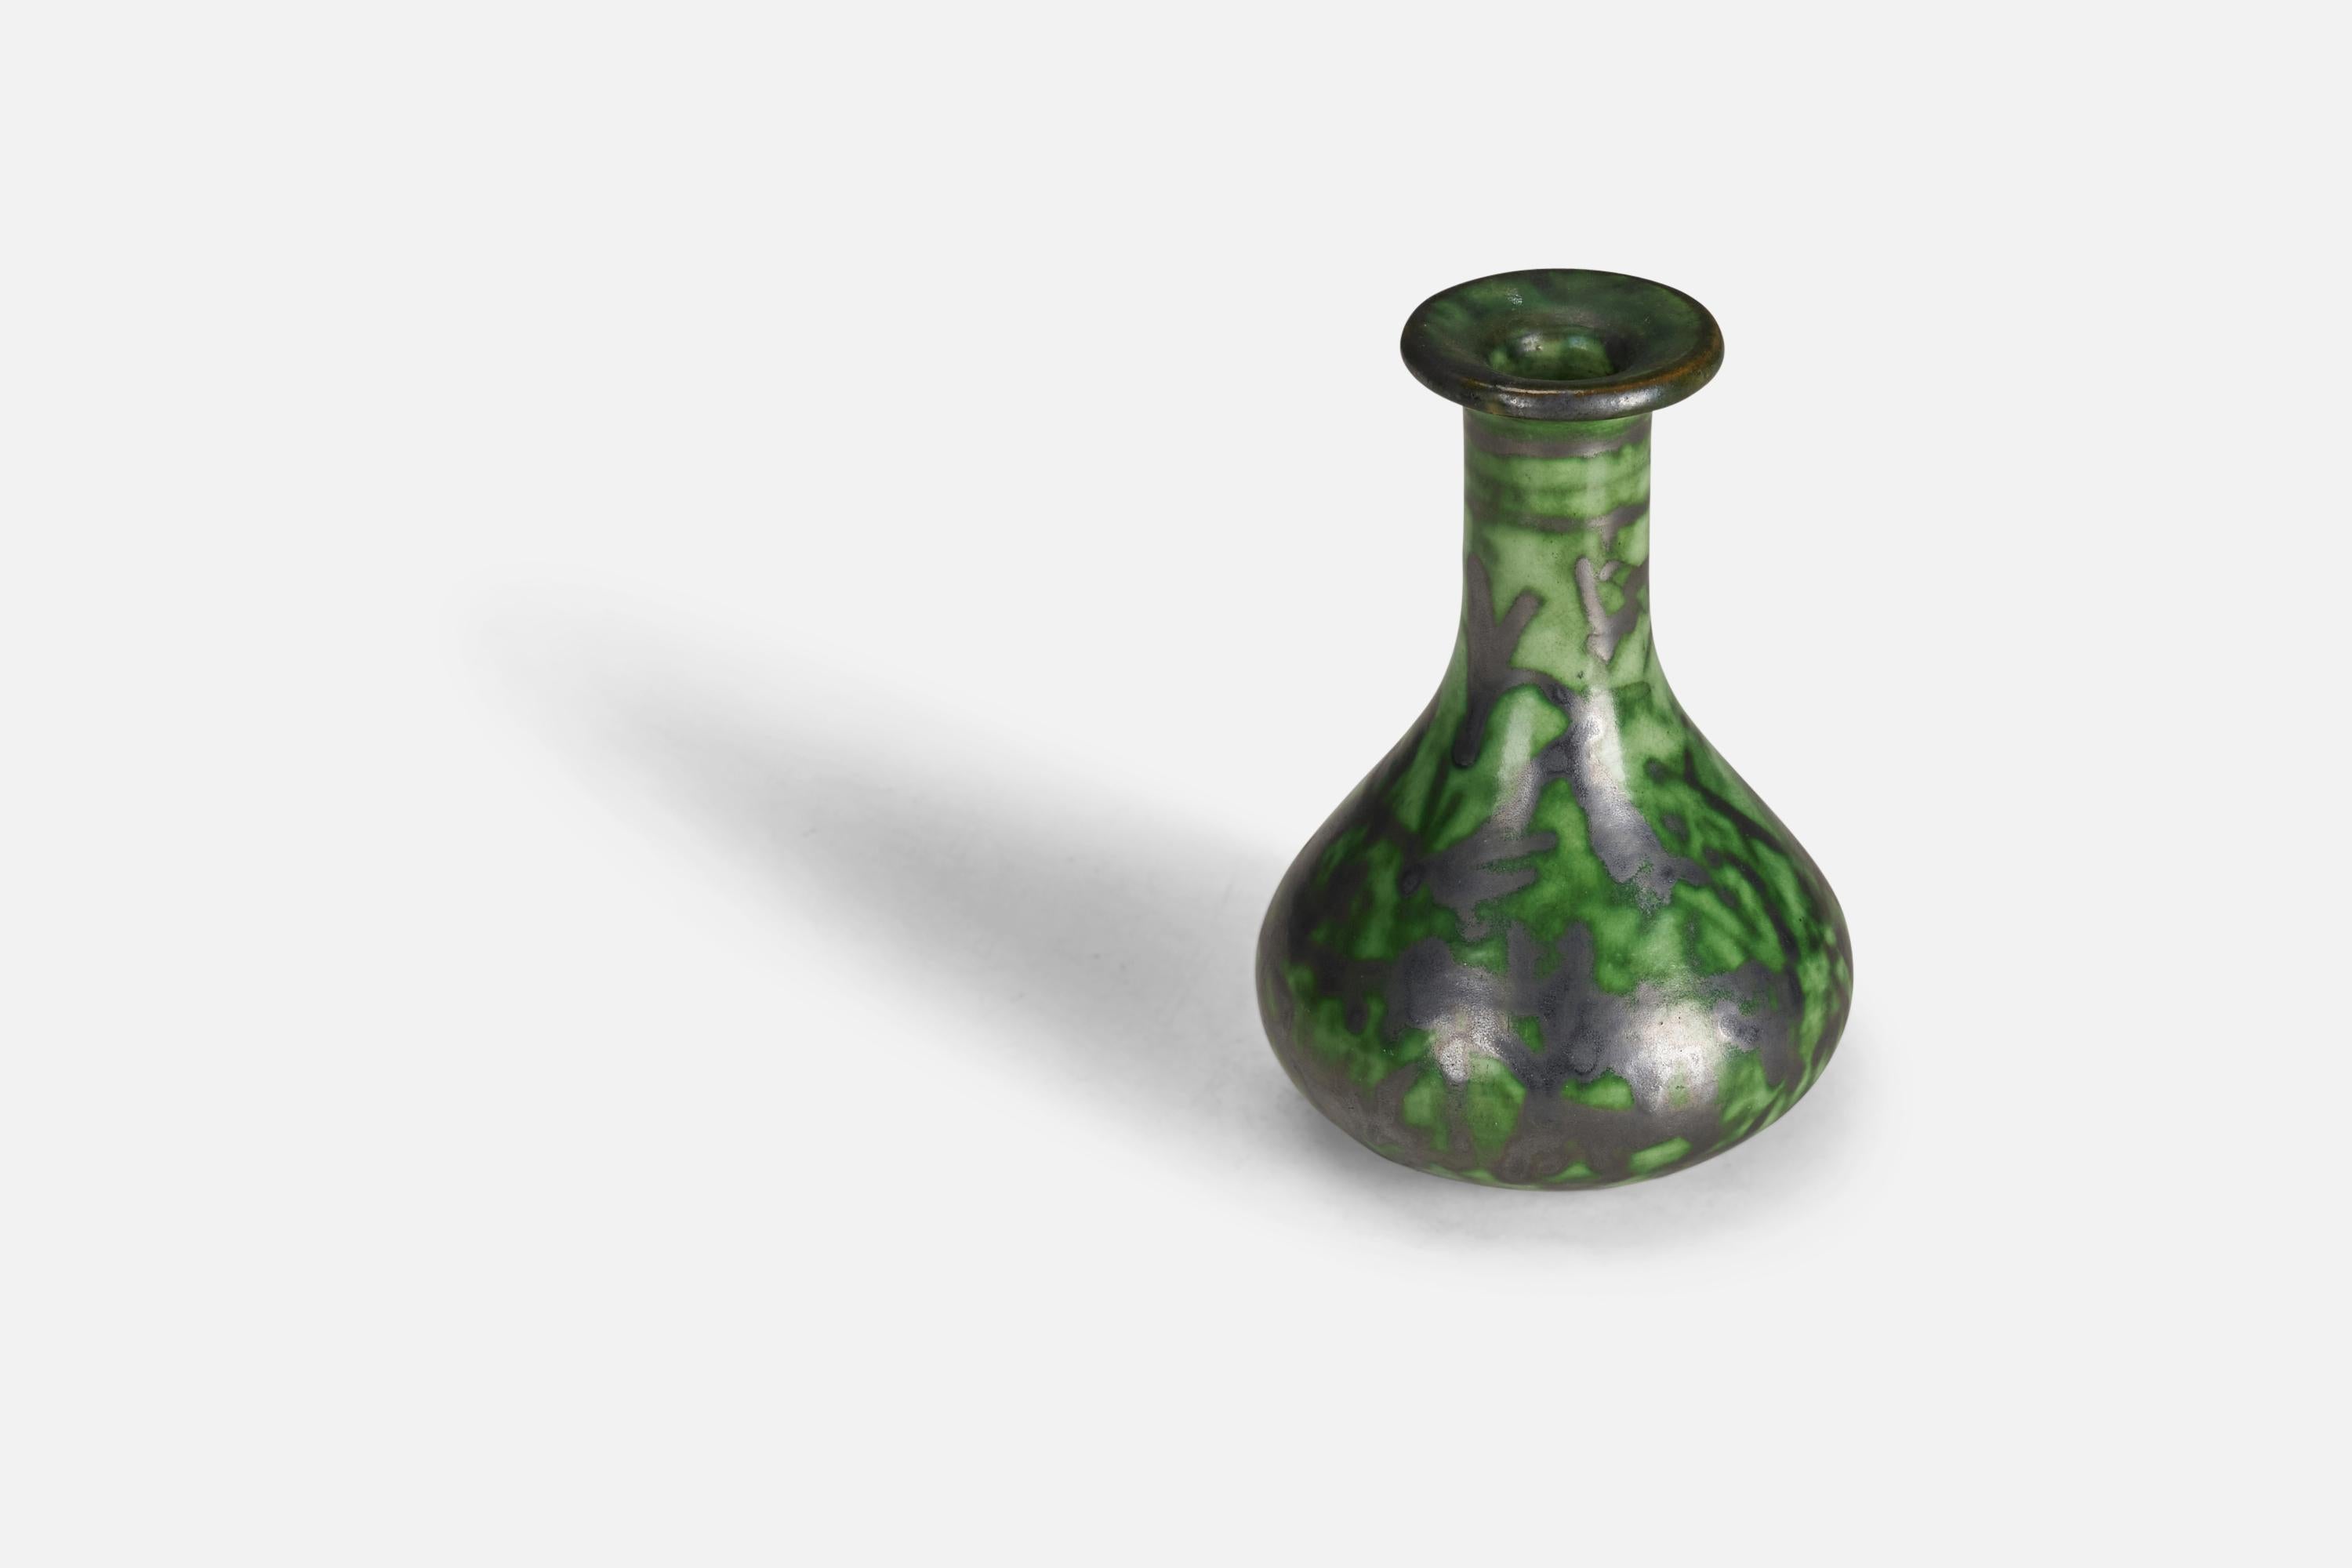 A green-glazed earthenware vase designed by Erik Mornils and produced by Nittsjö, Sweden, 1930s.